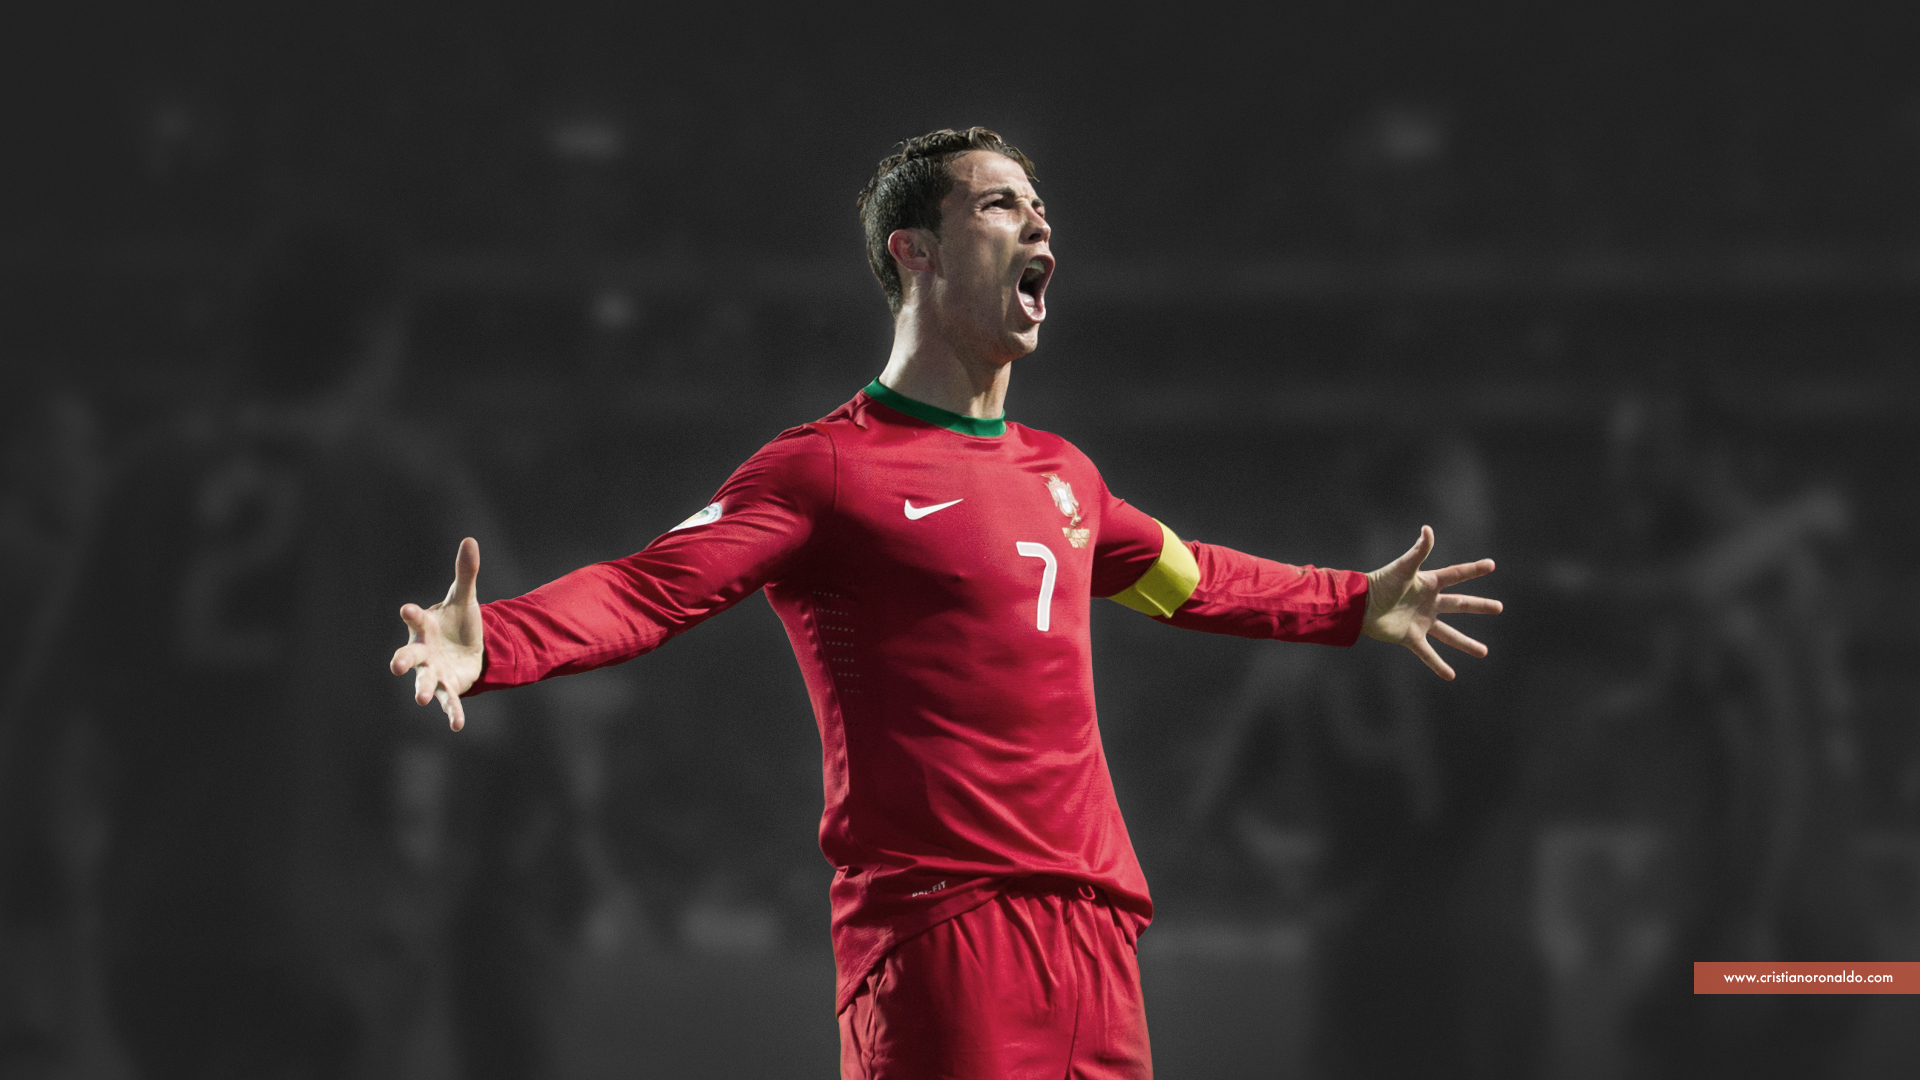 Cristiano Ronaldo 2014 Wallpapers Full HD Sporteology